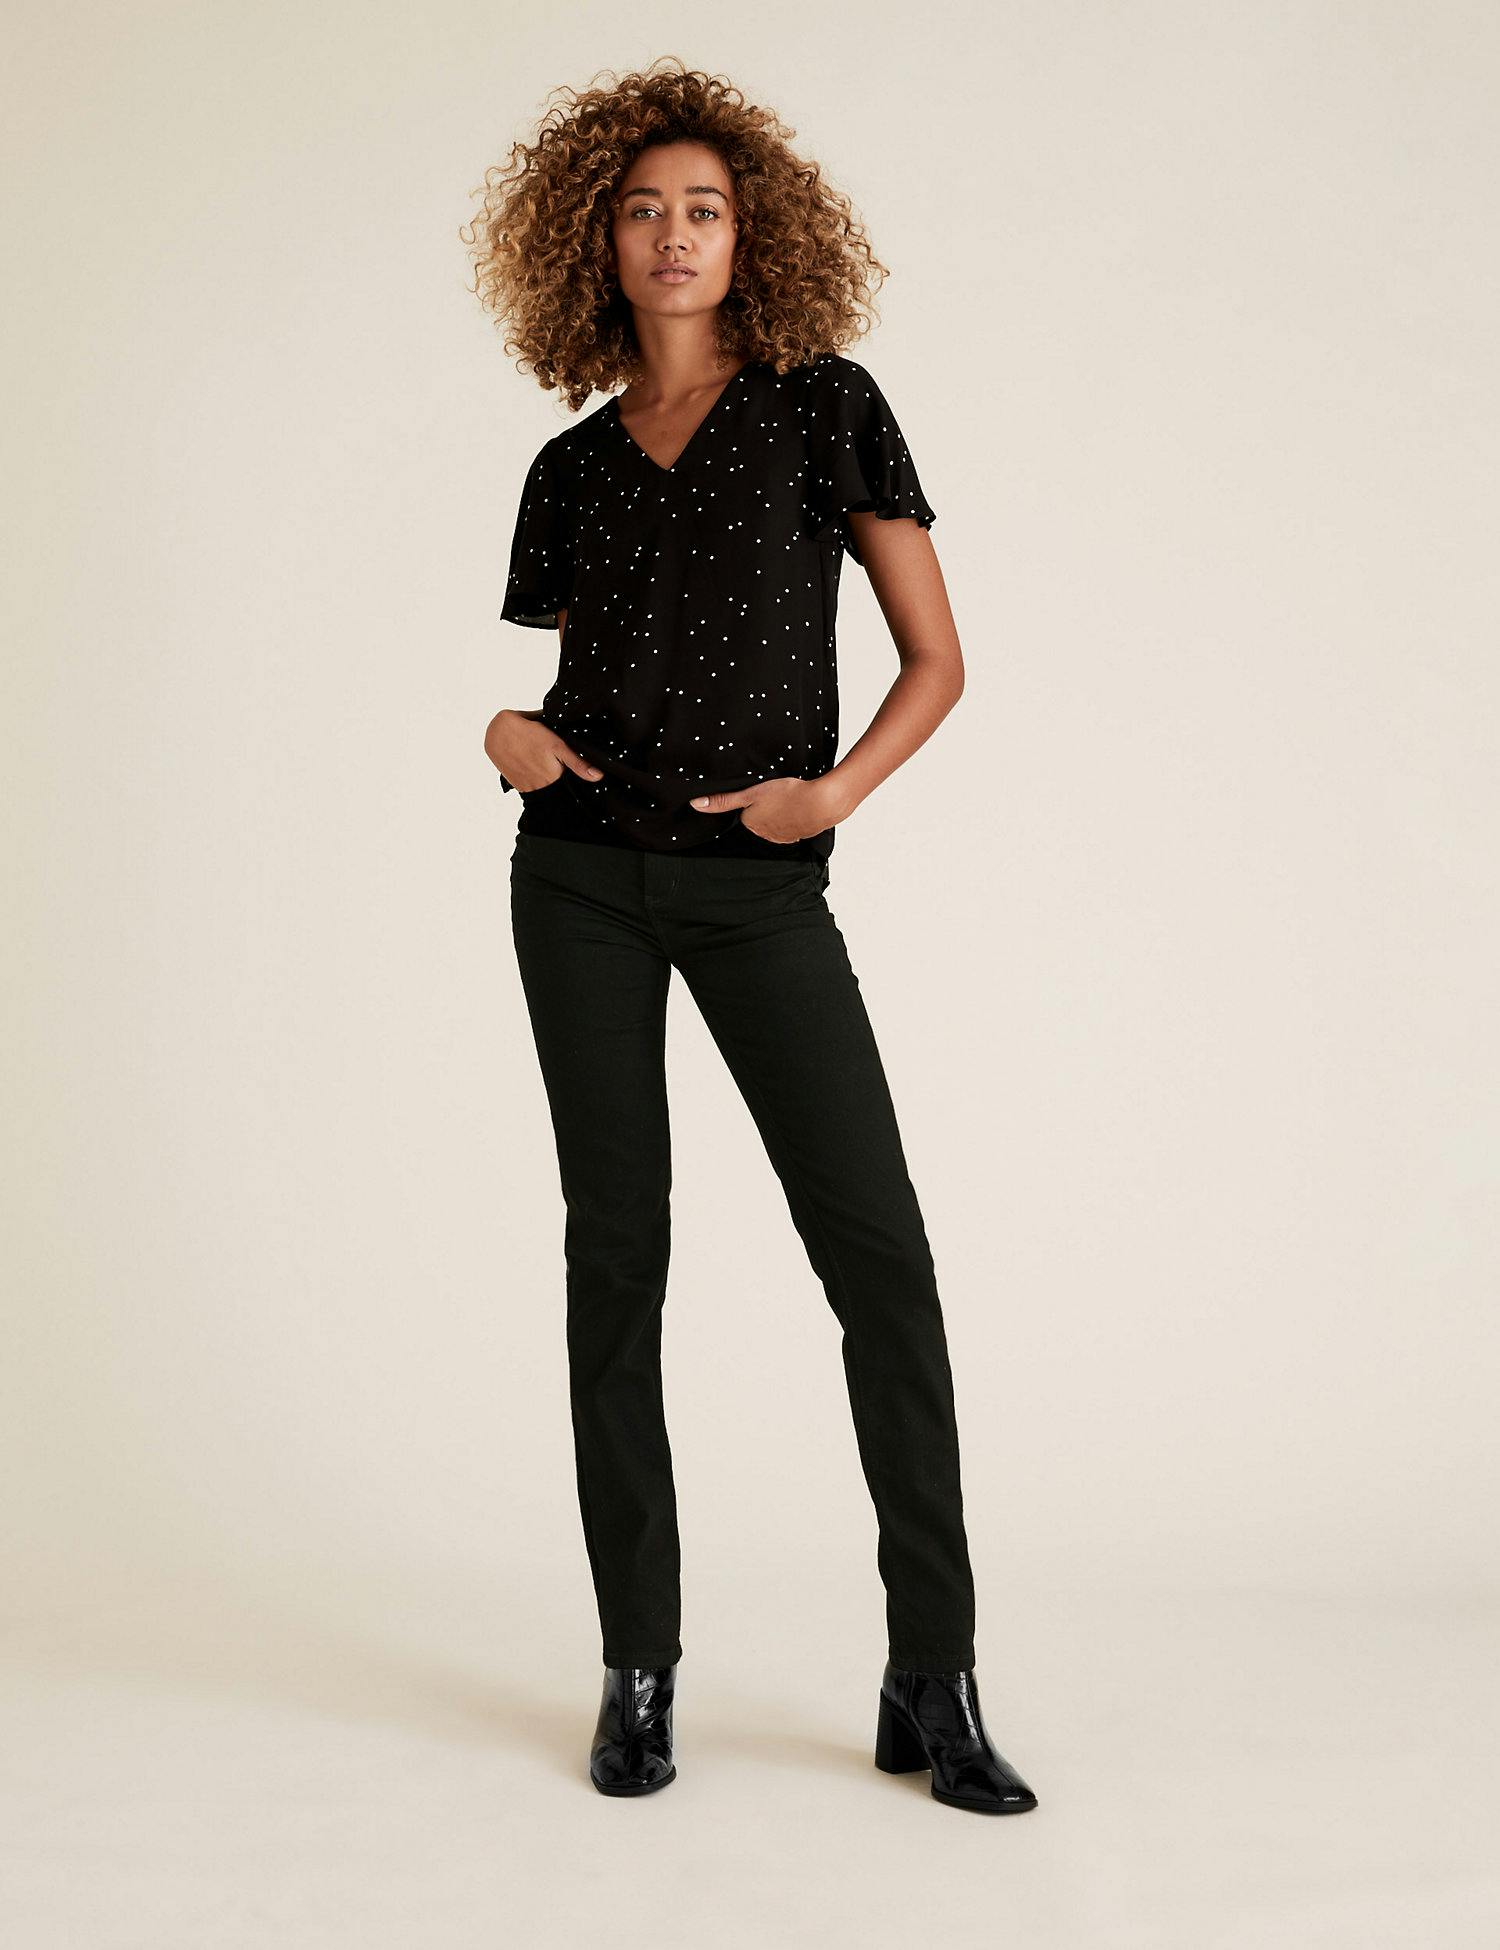 Ex M&S Ladies Per Una Roma Rise Straight Leg Denim Jeans Size 6-24 Marks Spencer 